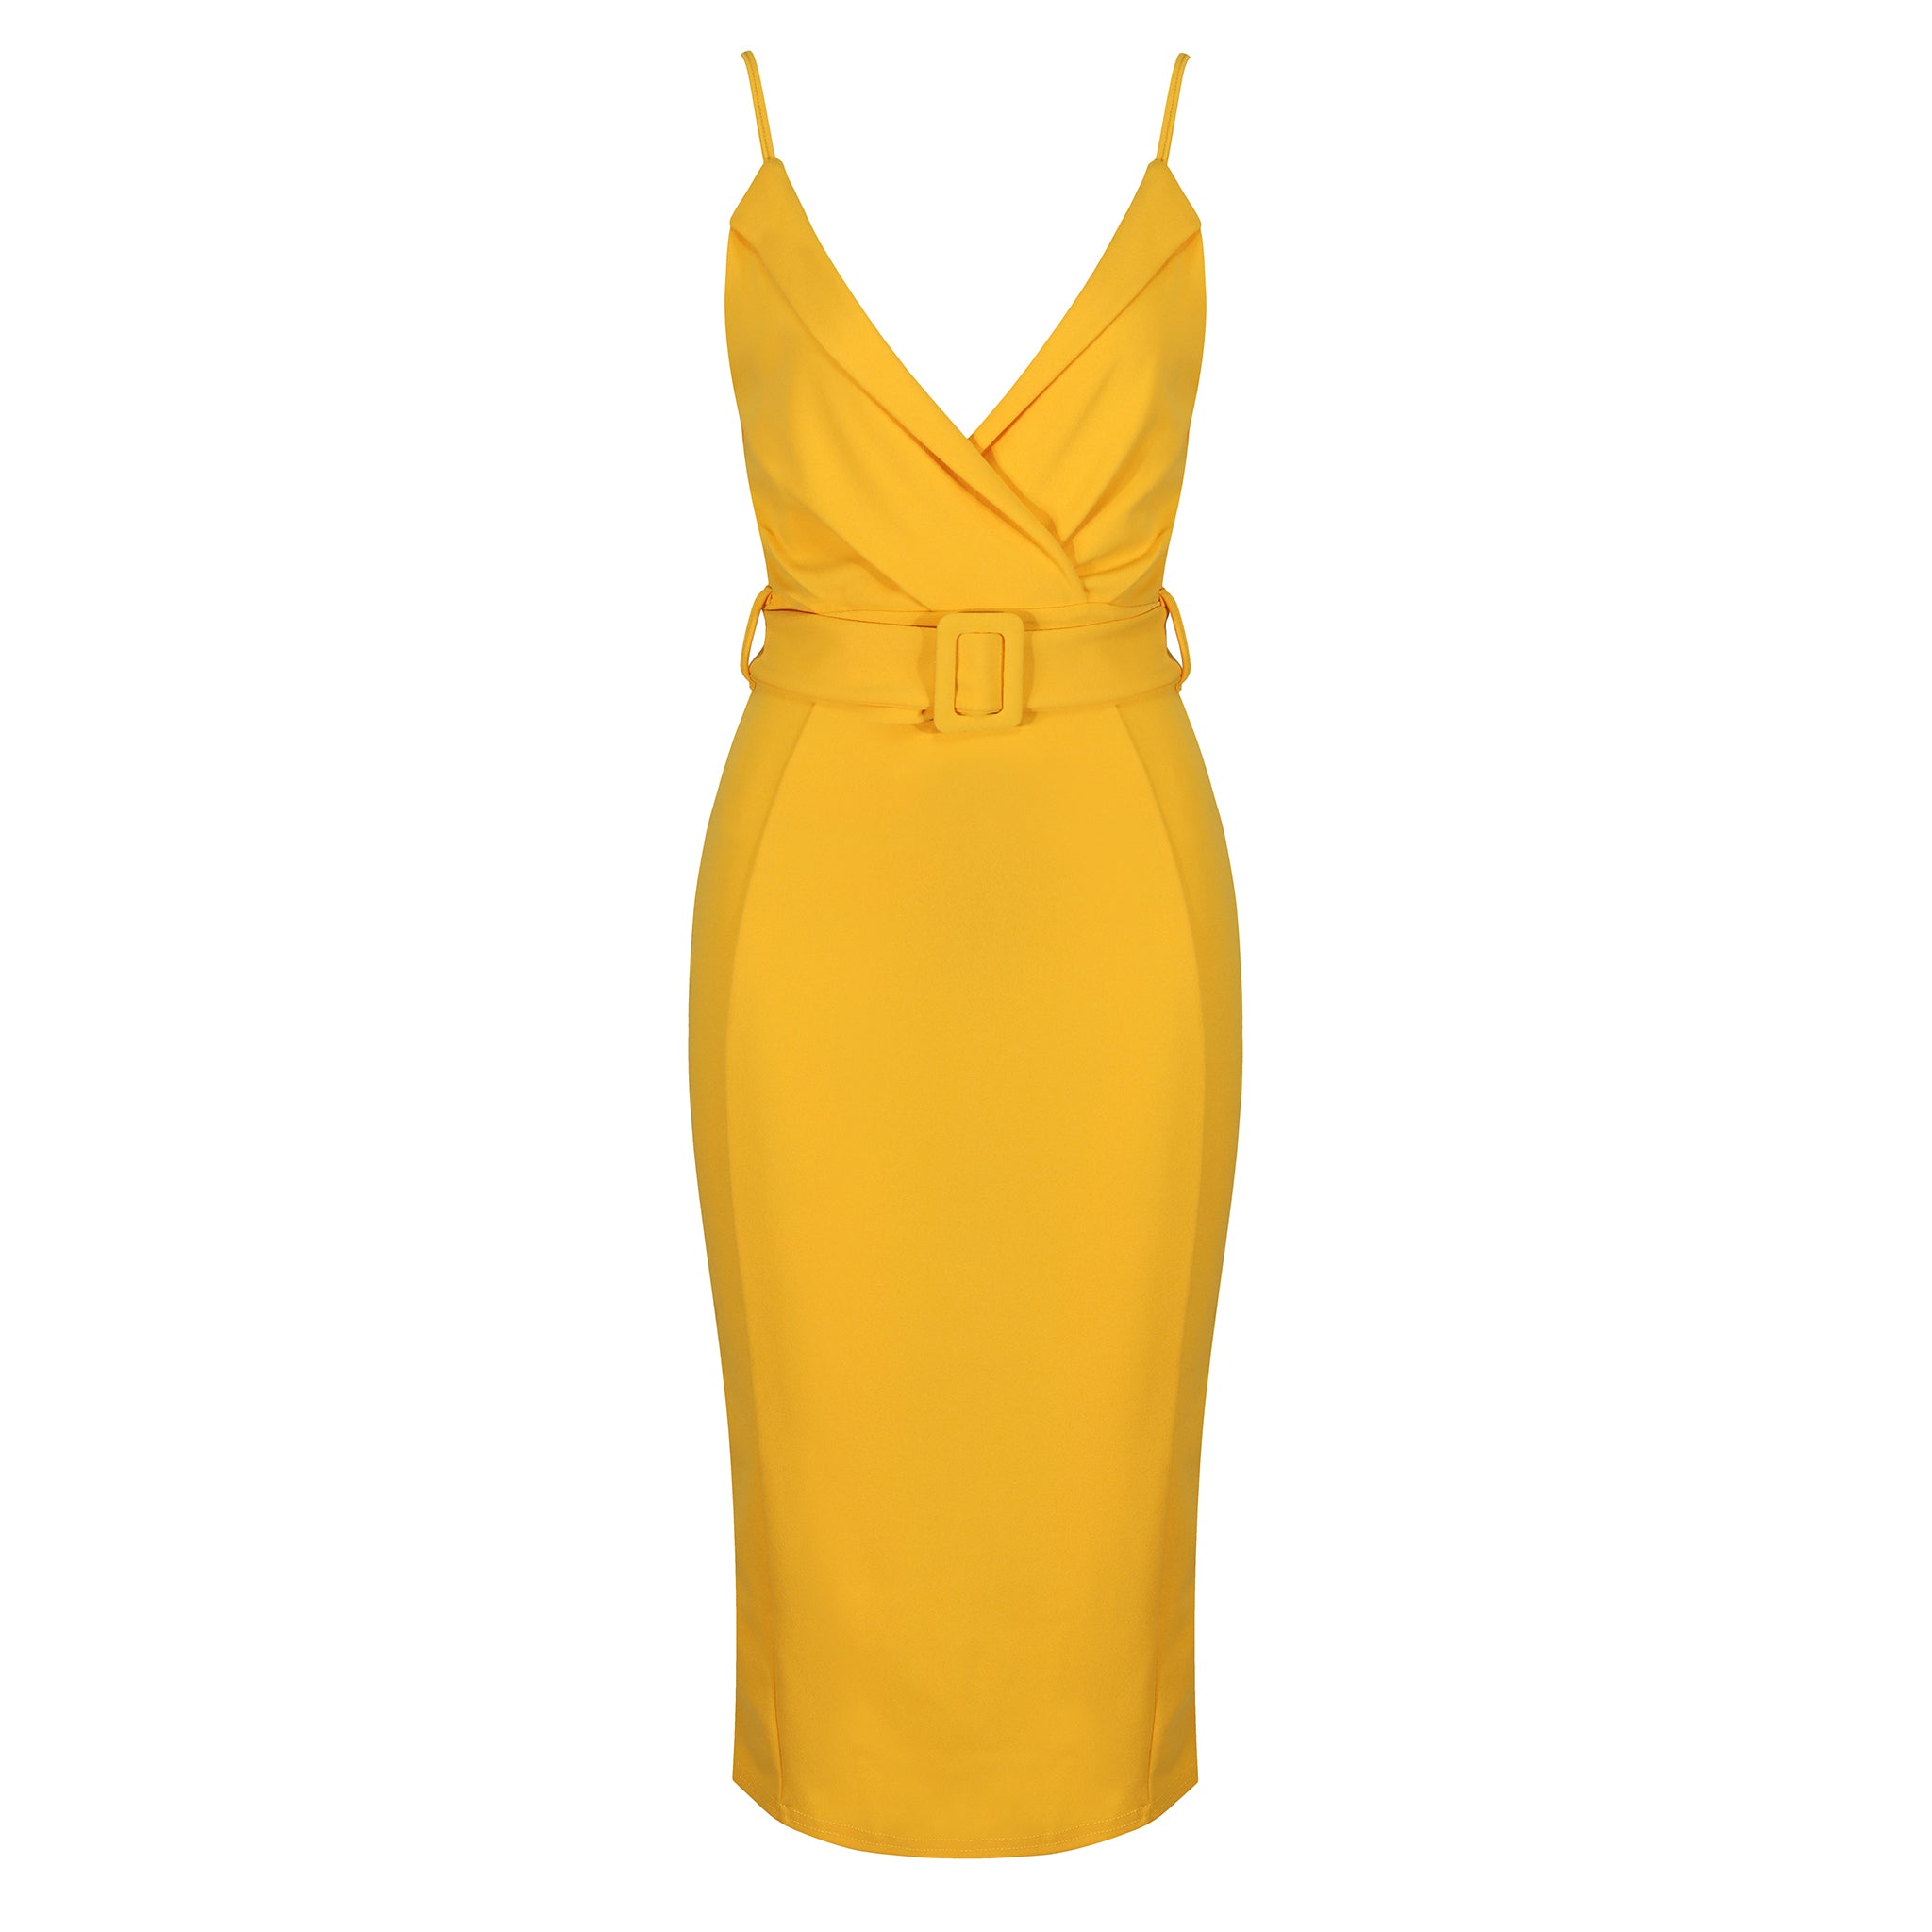 Honey Yellow Strappy Bodycon Wiggle Dress